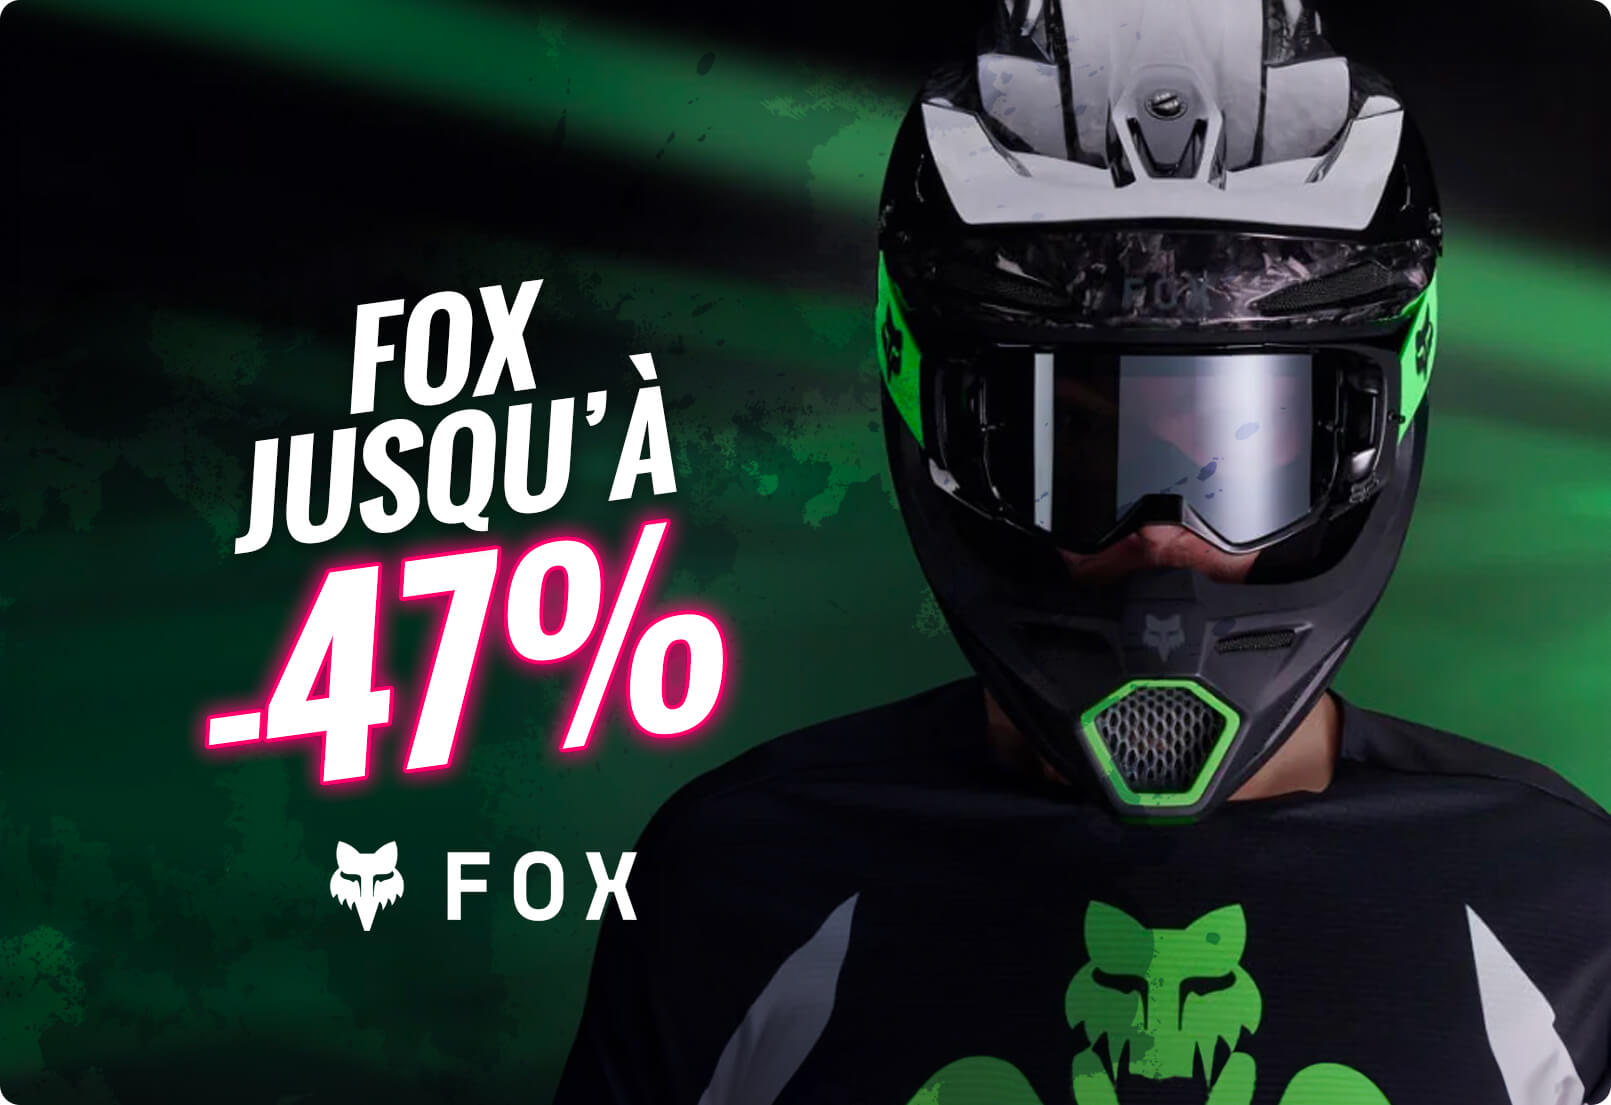 Fox jusqu'à -47%